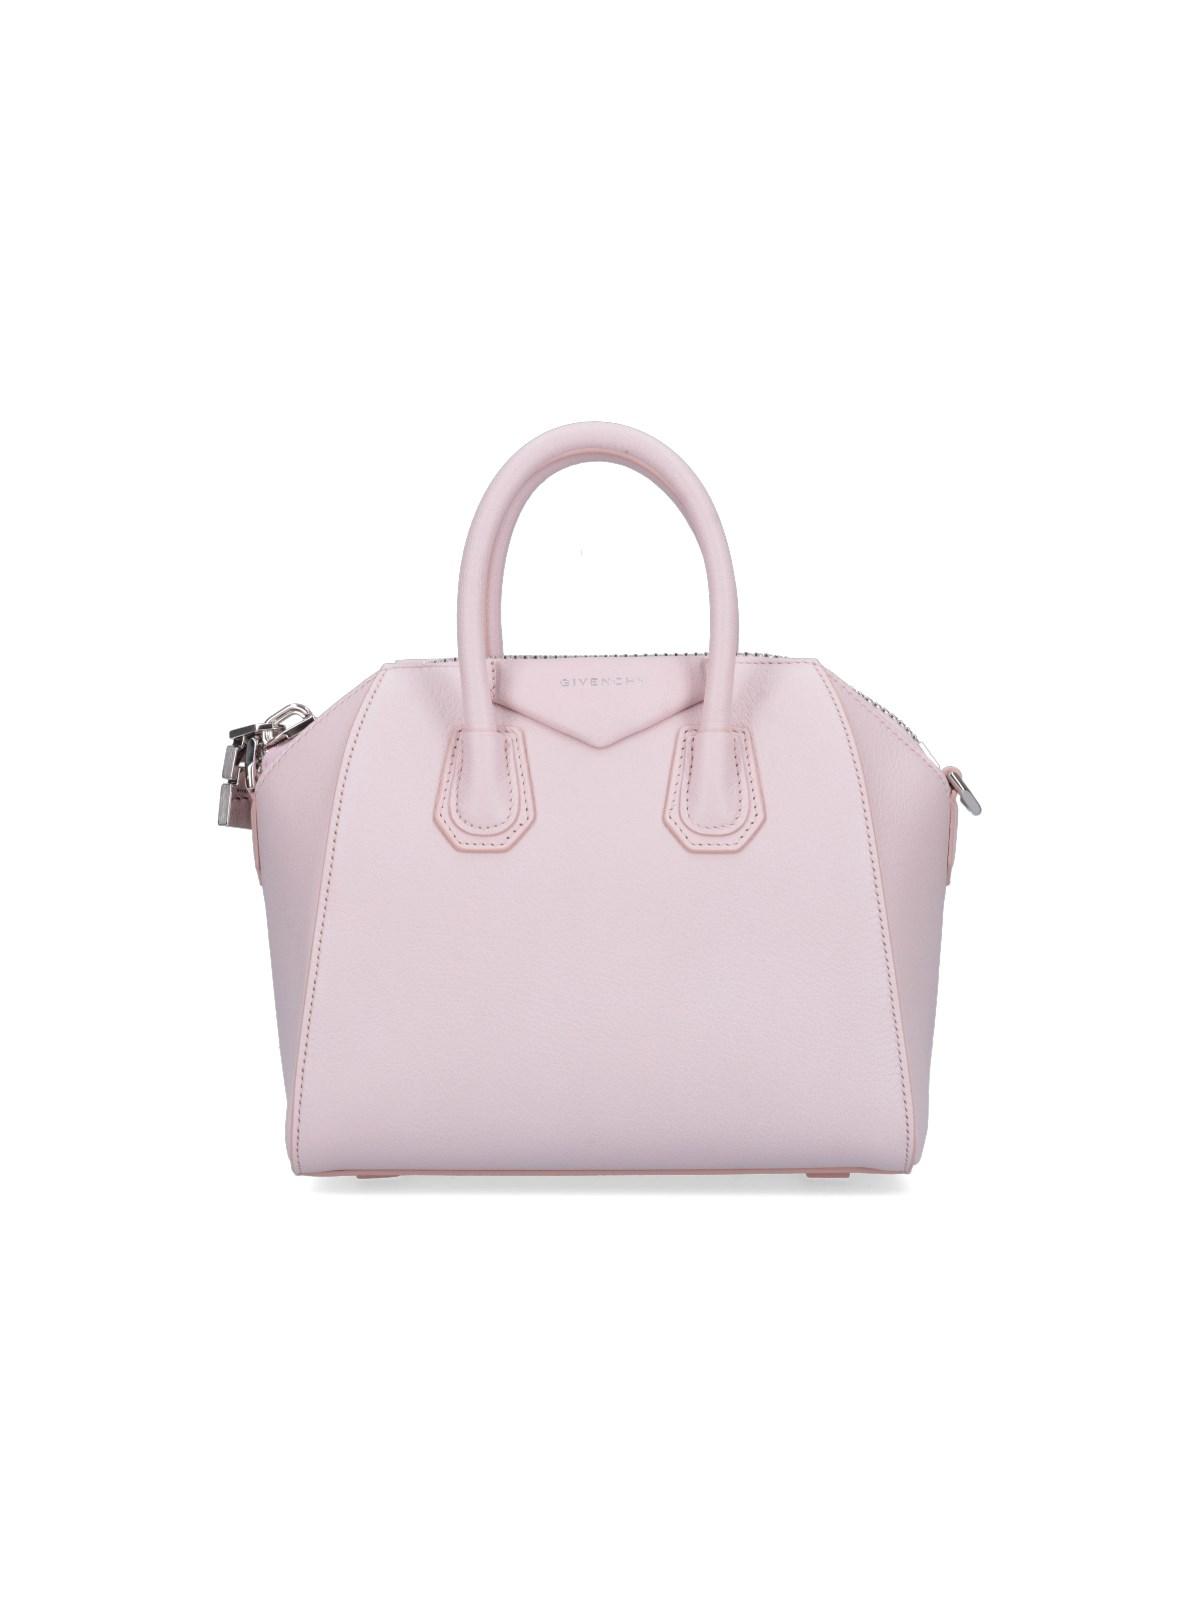 Givenchy 'antigona' Mini Bag in Pink